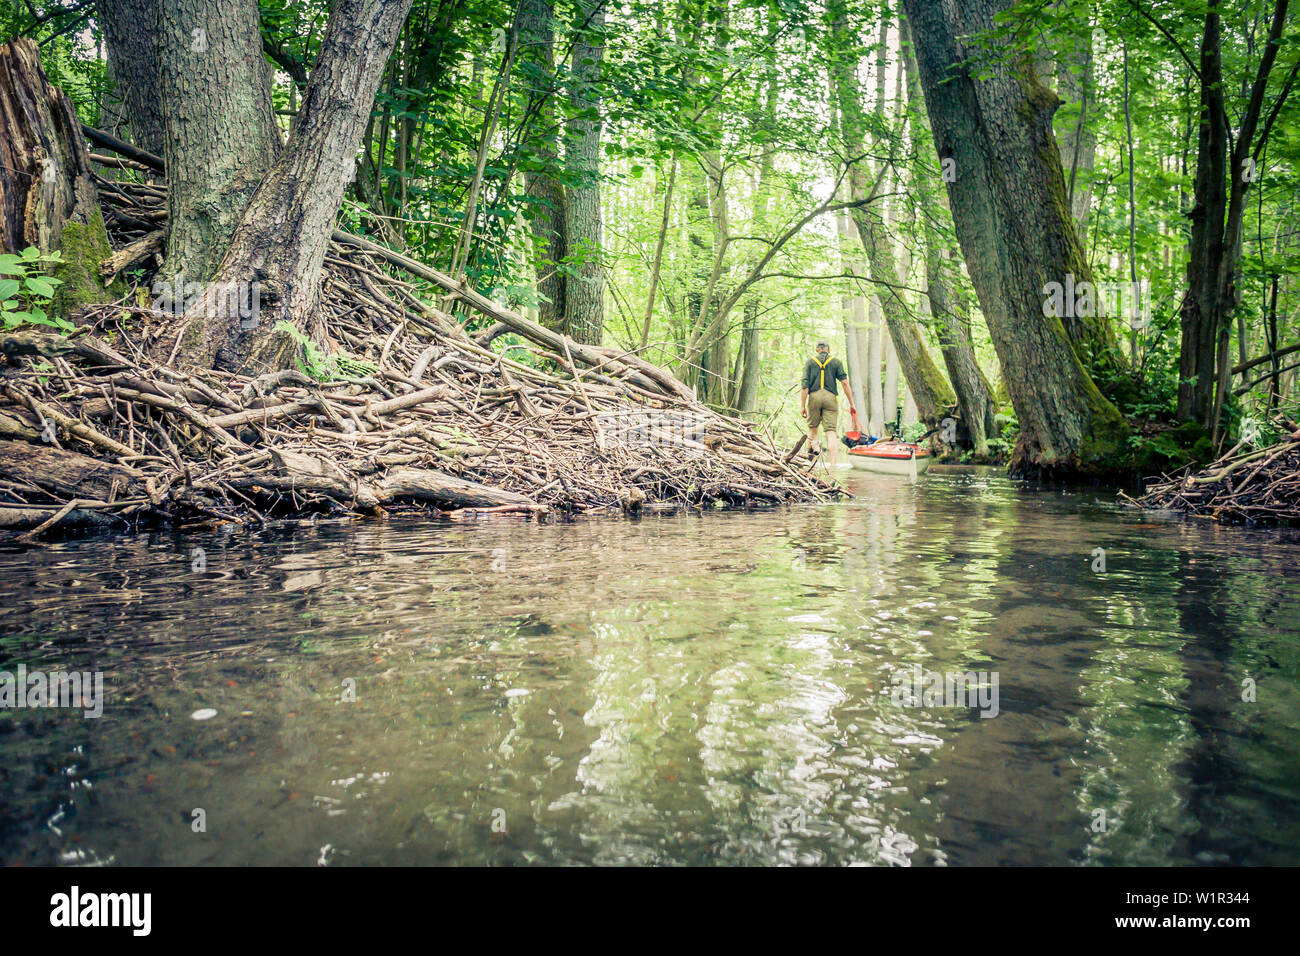 Kayaking tour through the narrow rivers of the Feldberger Seenlandschaft Stock Photo